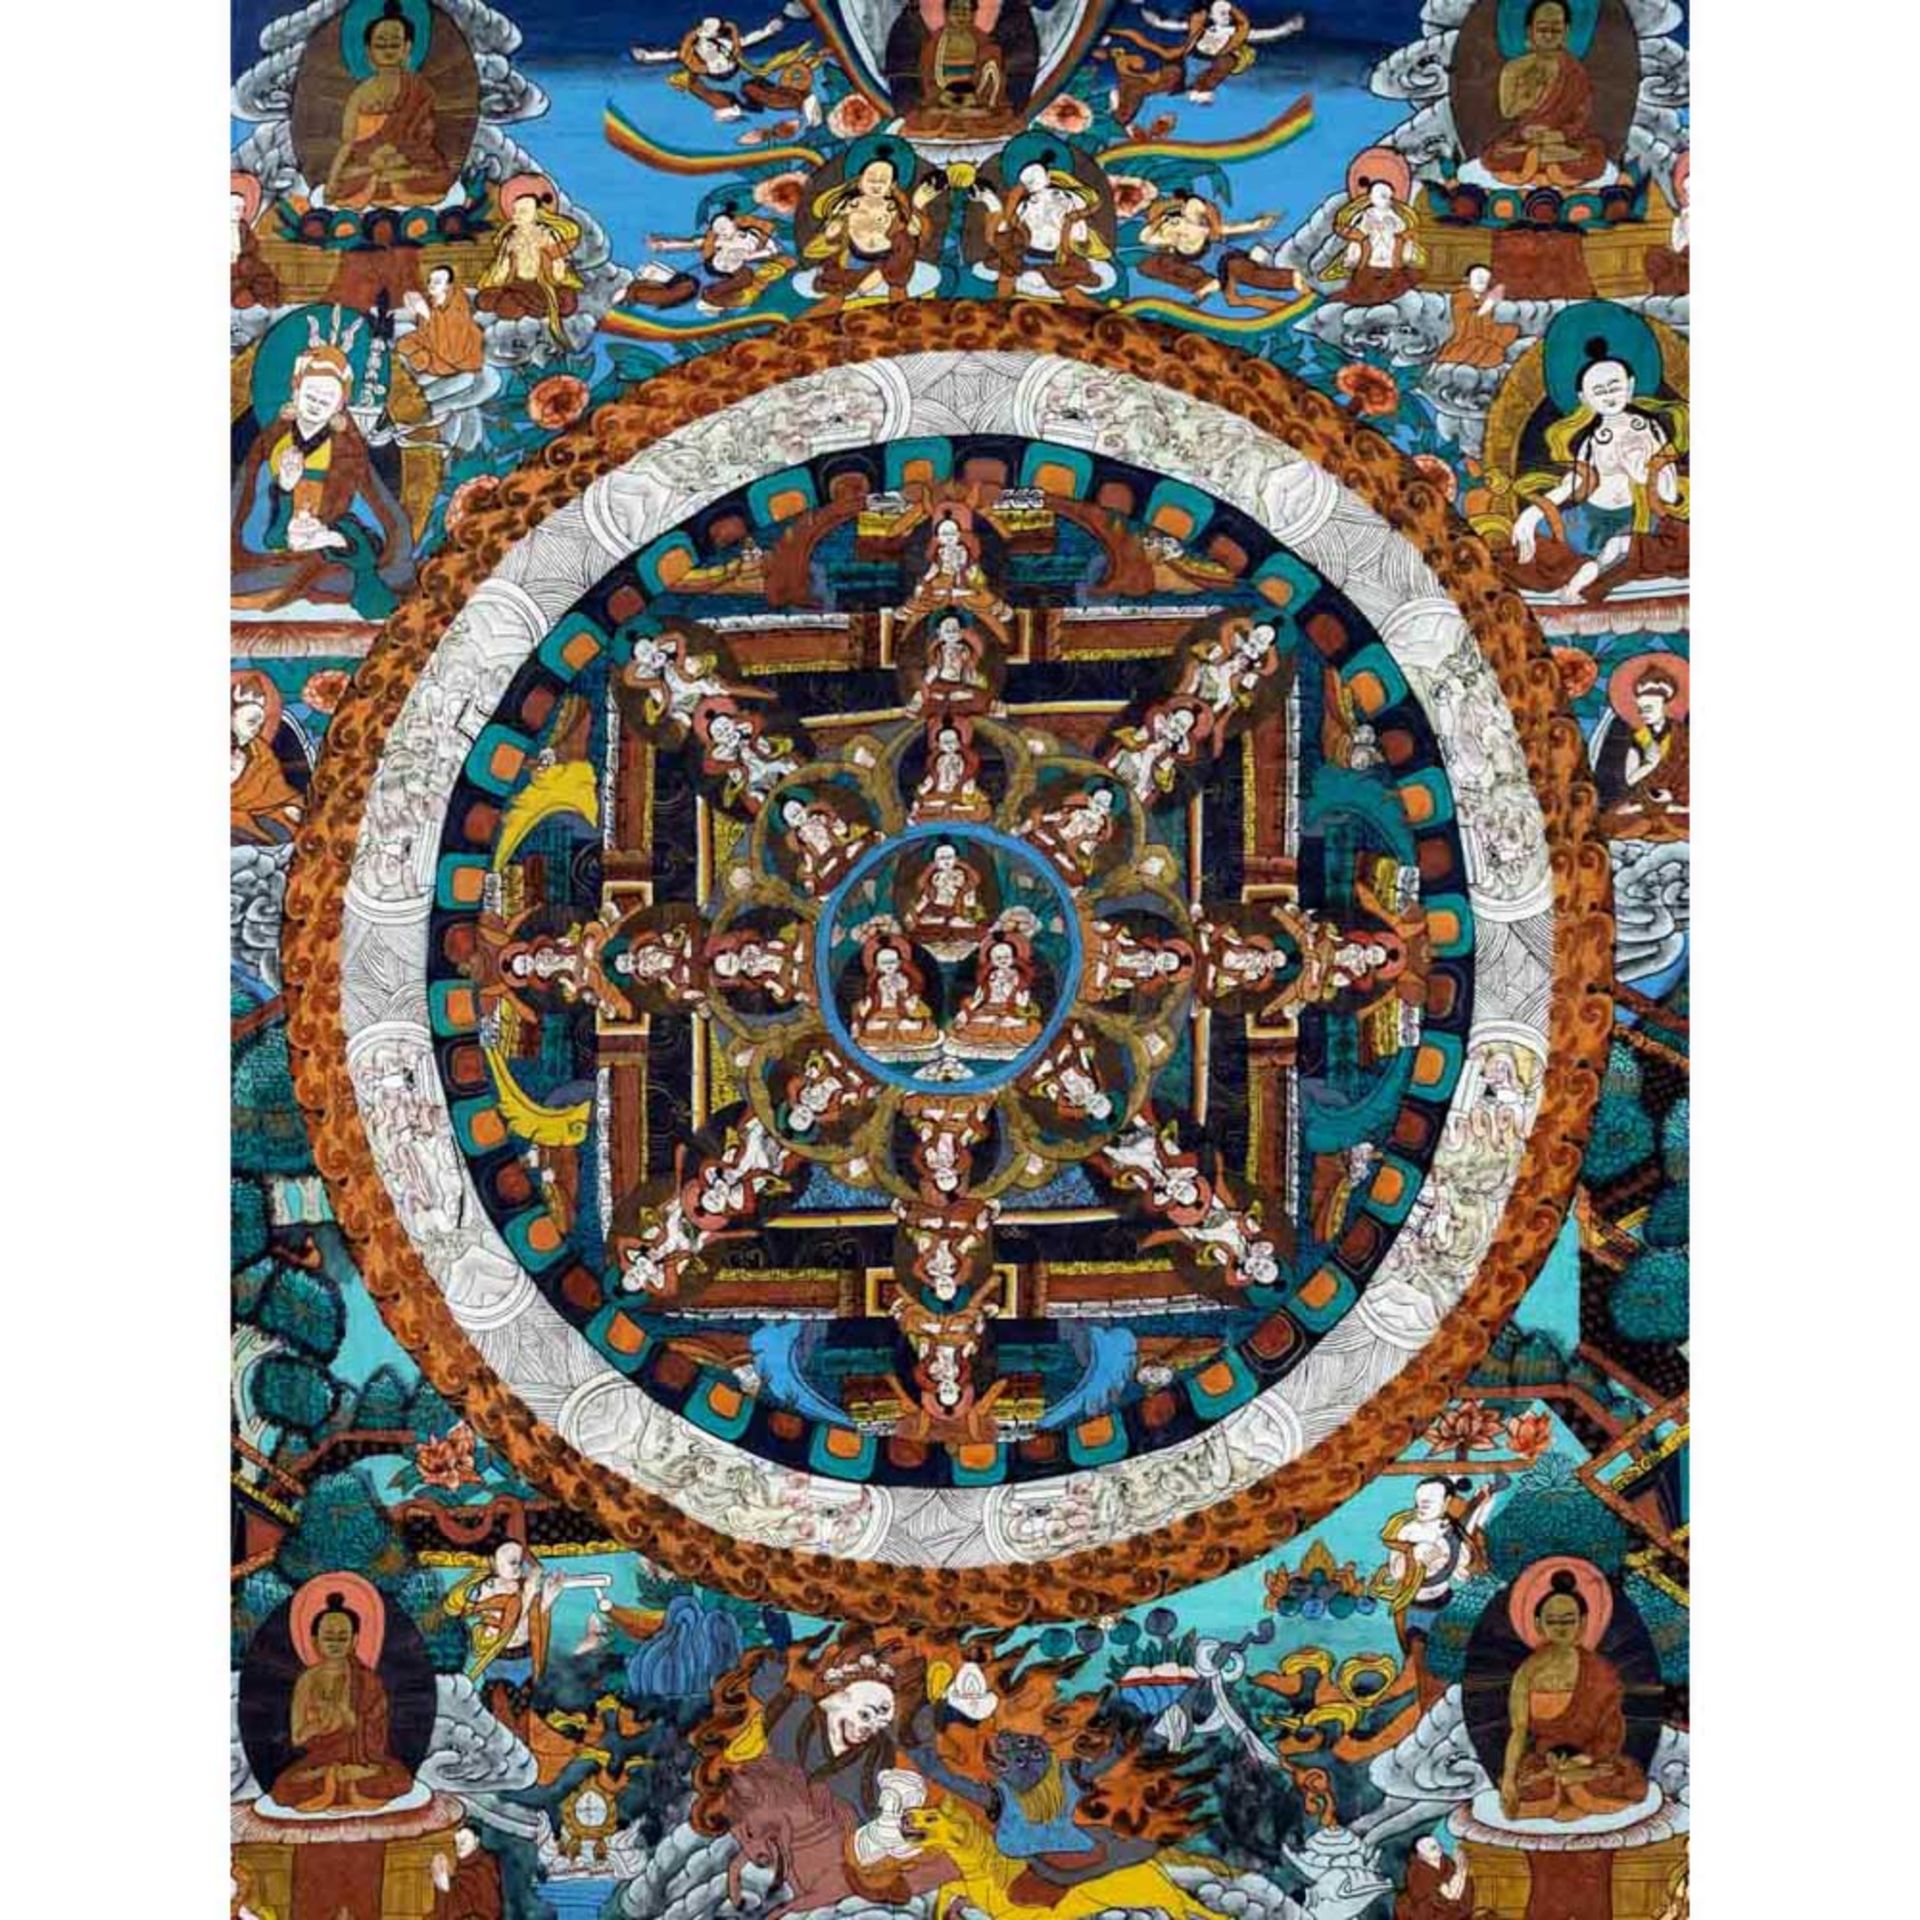 Thangka with central mandala on light blue background